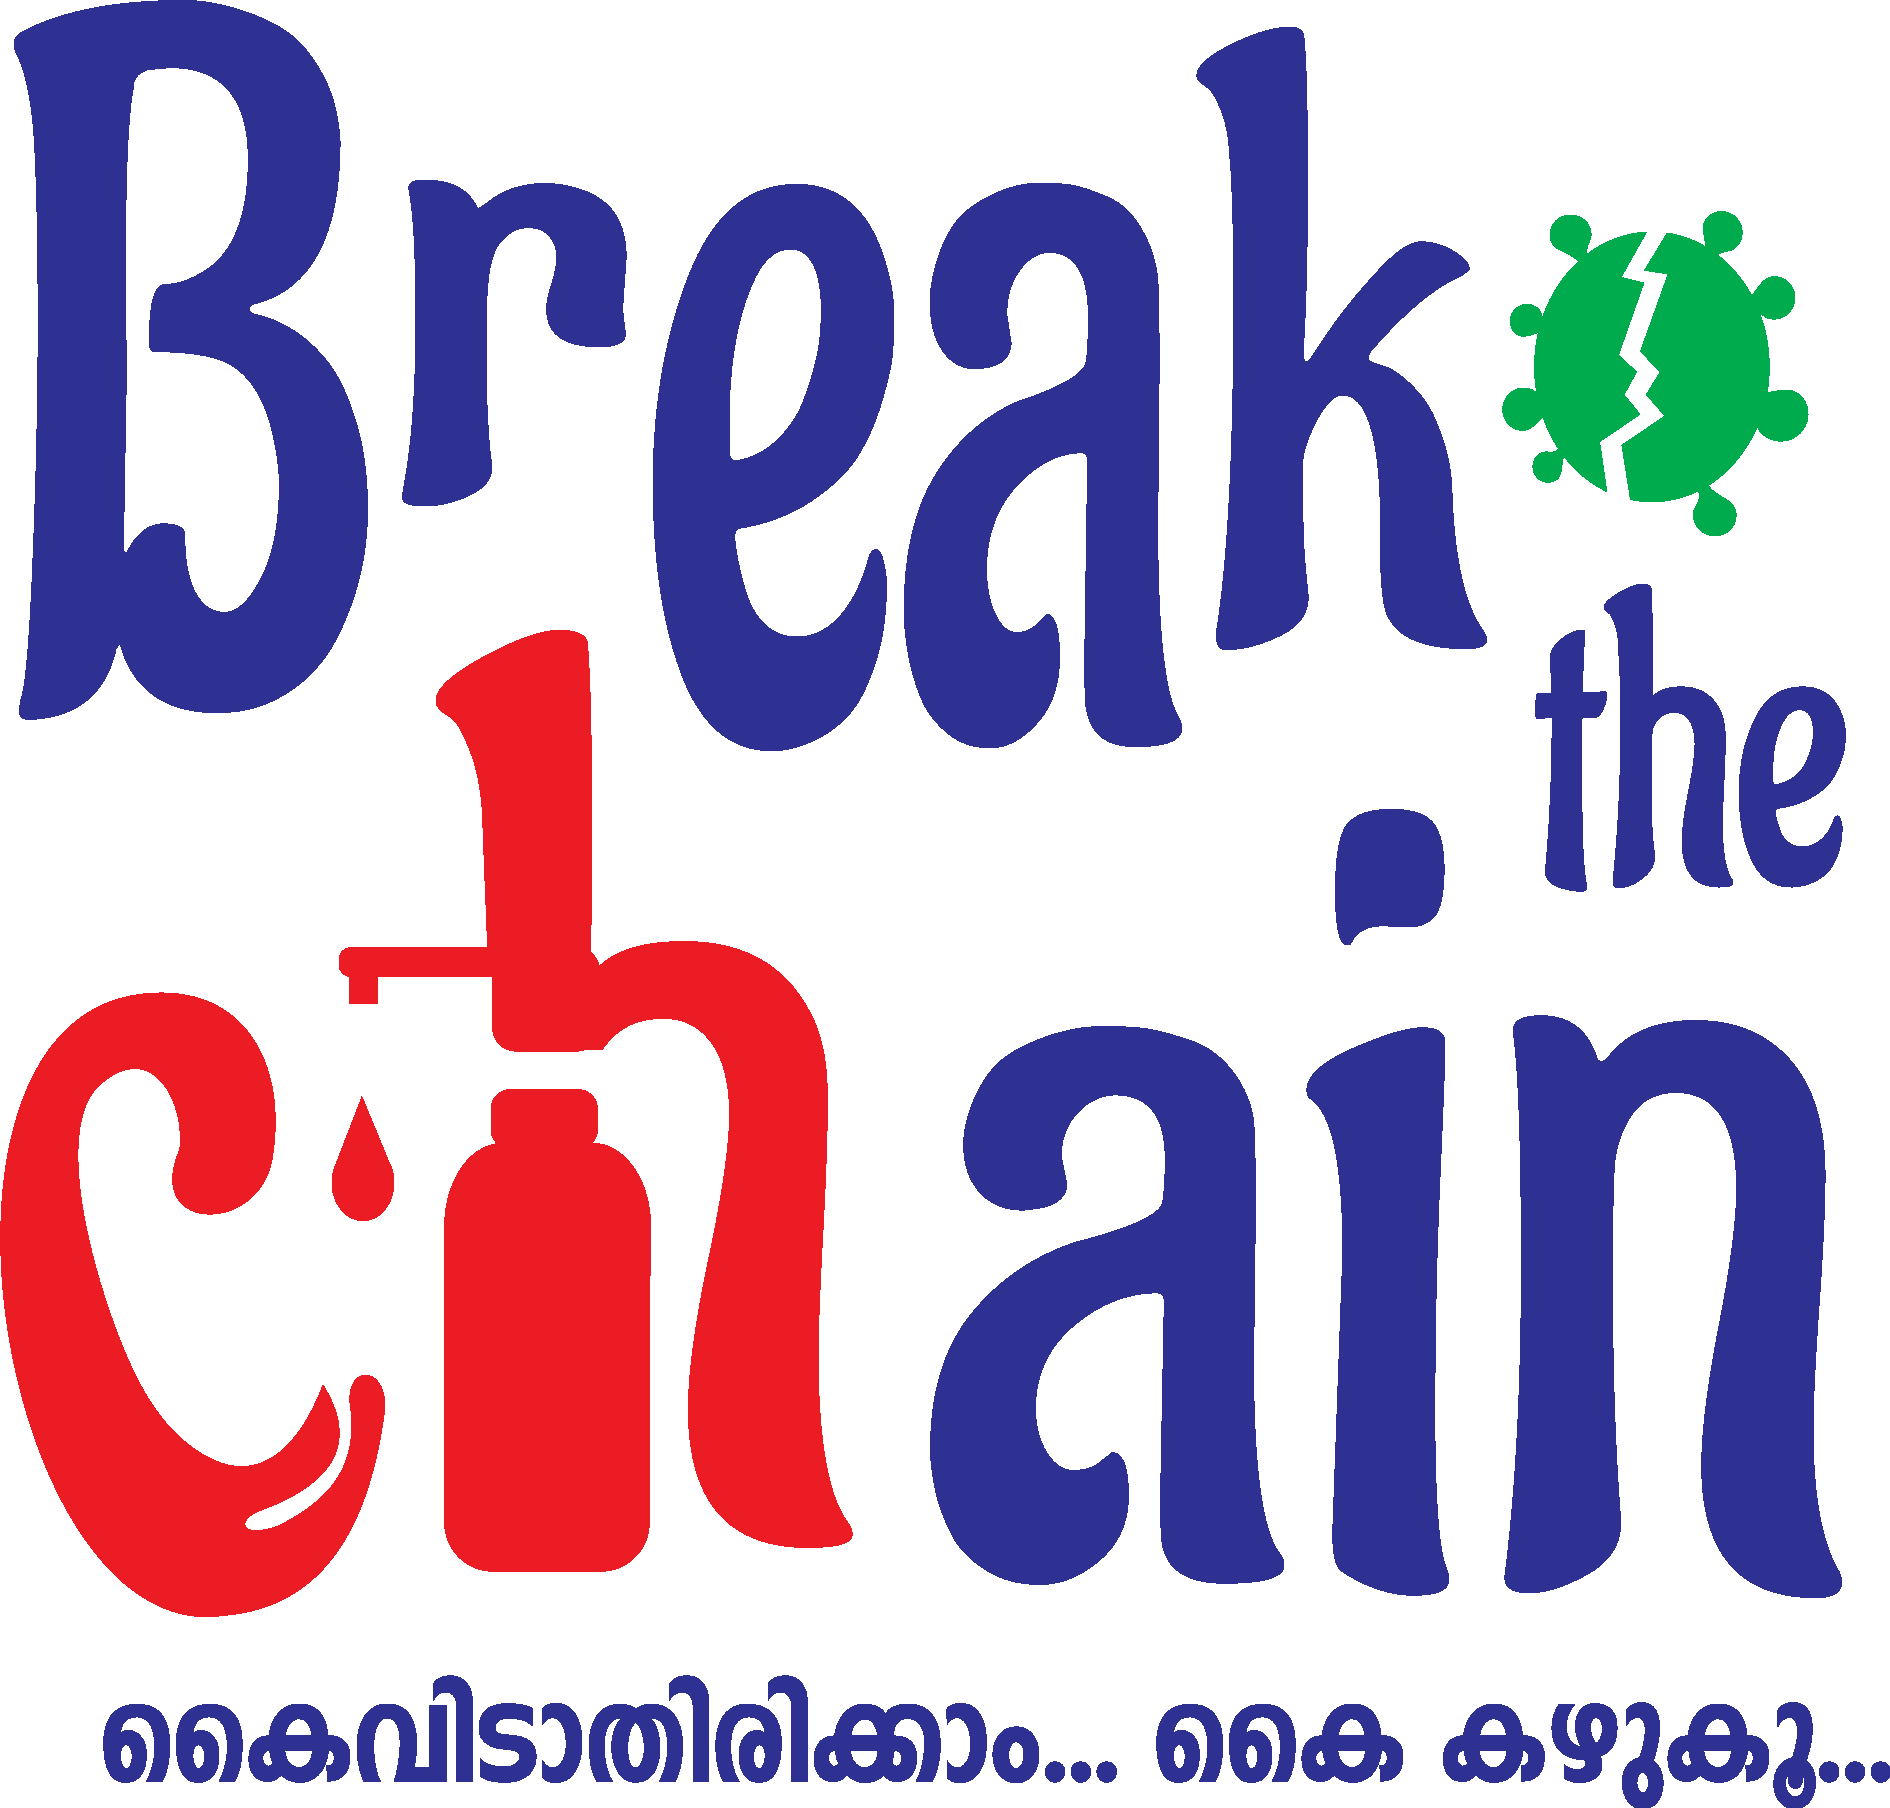 Break Every Chain Rally | ACLU of Alabama